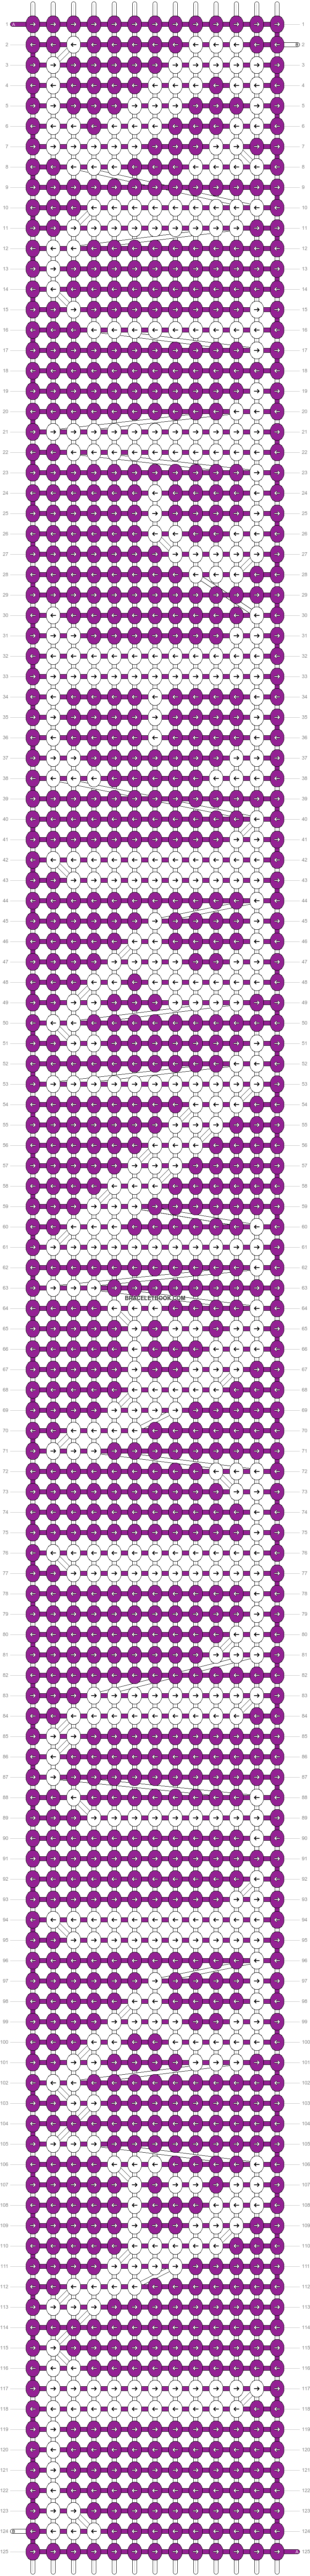 Alpha pattern #39461 variation #107338 pattern